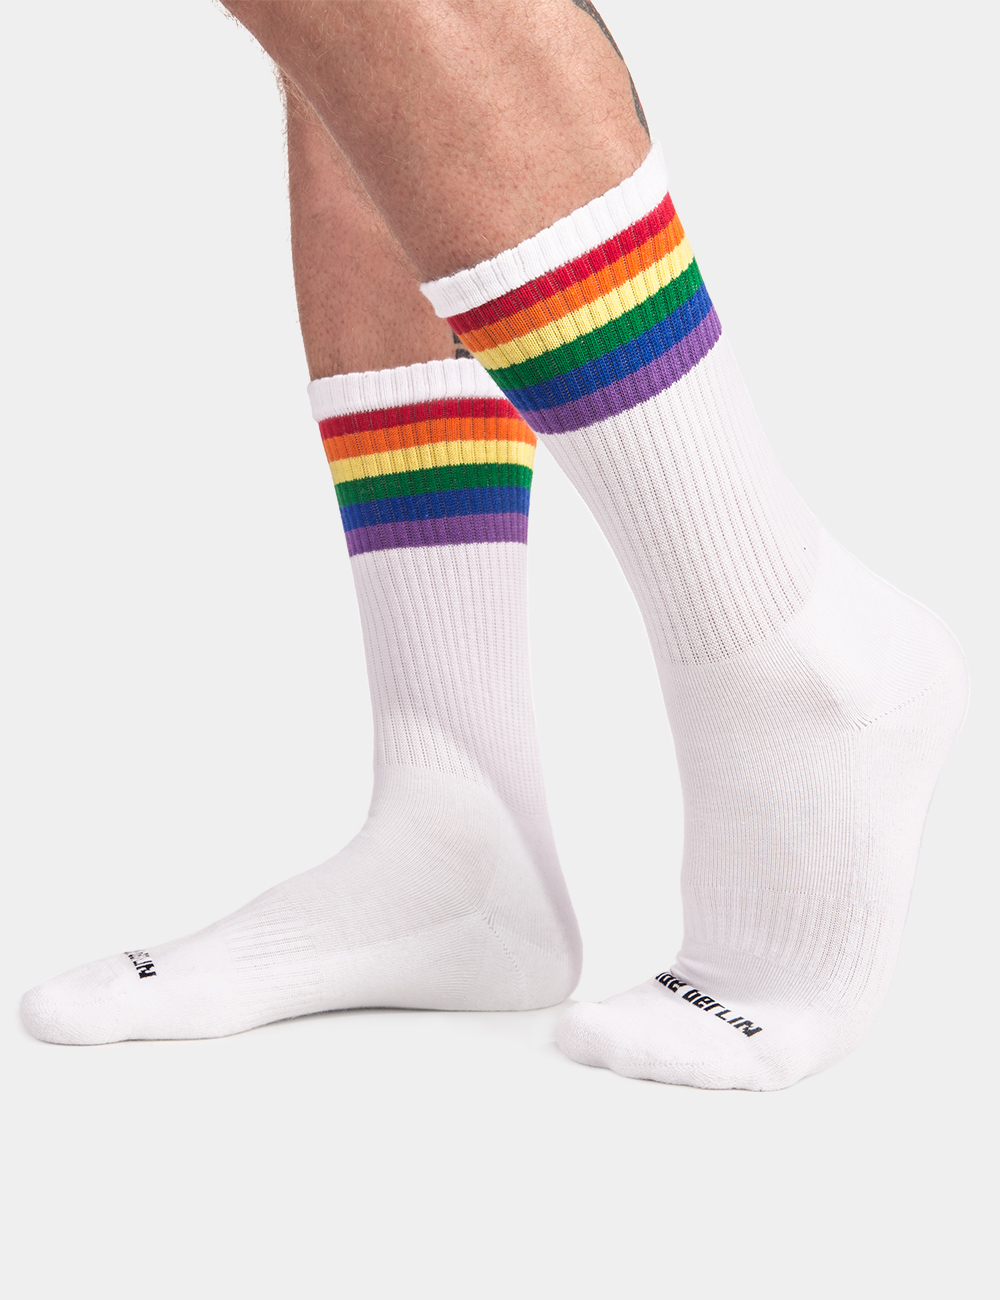 Pride themed underwear and socks back in stock!